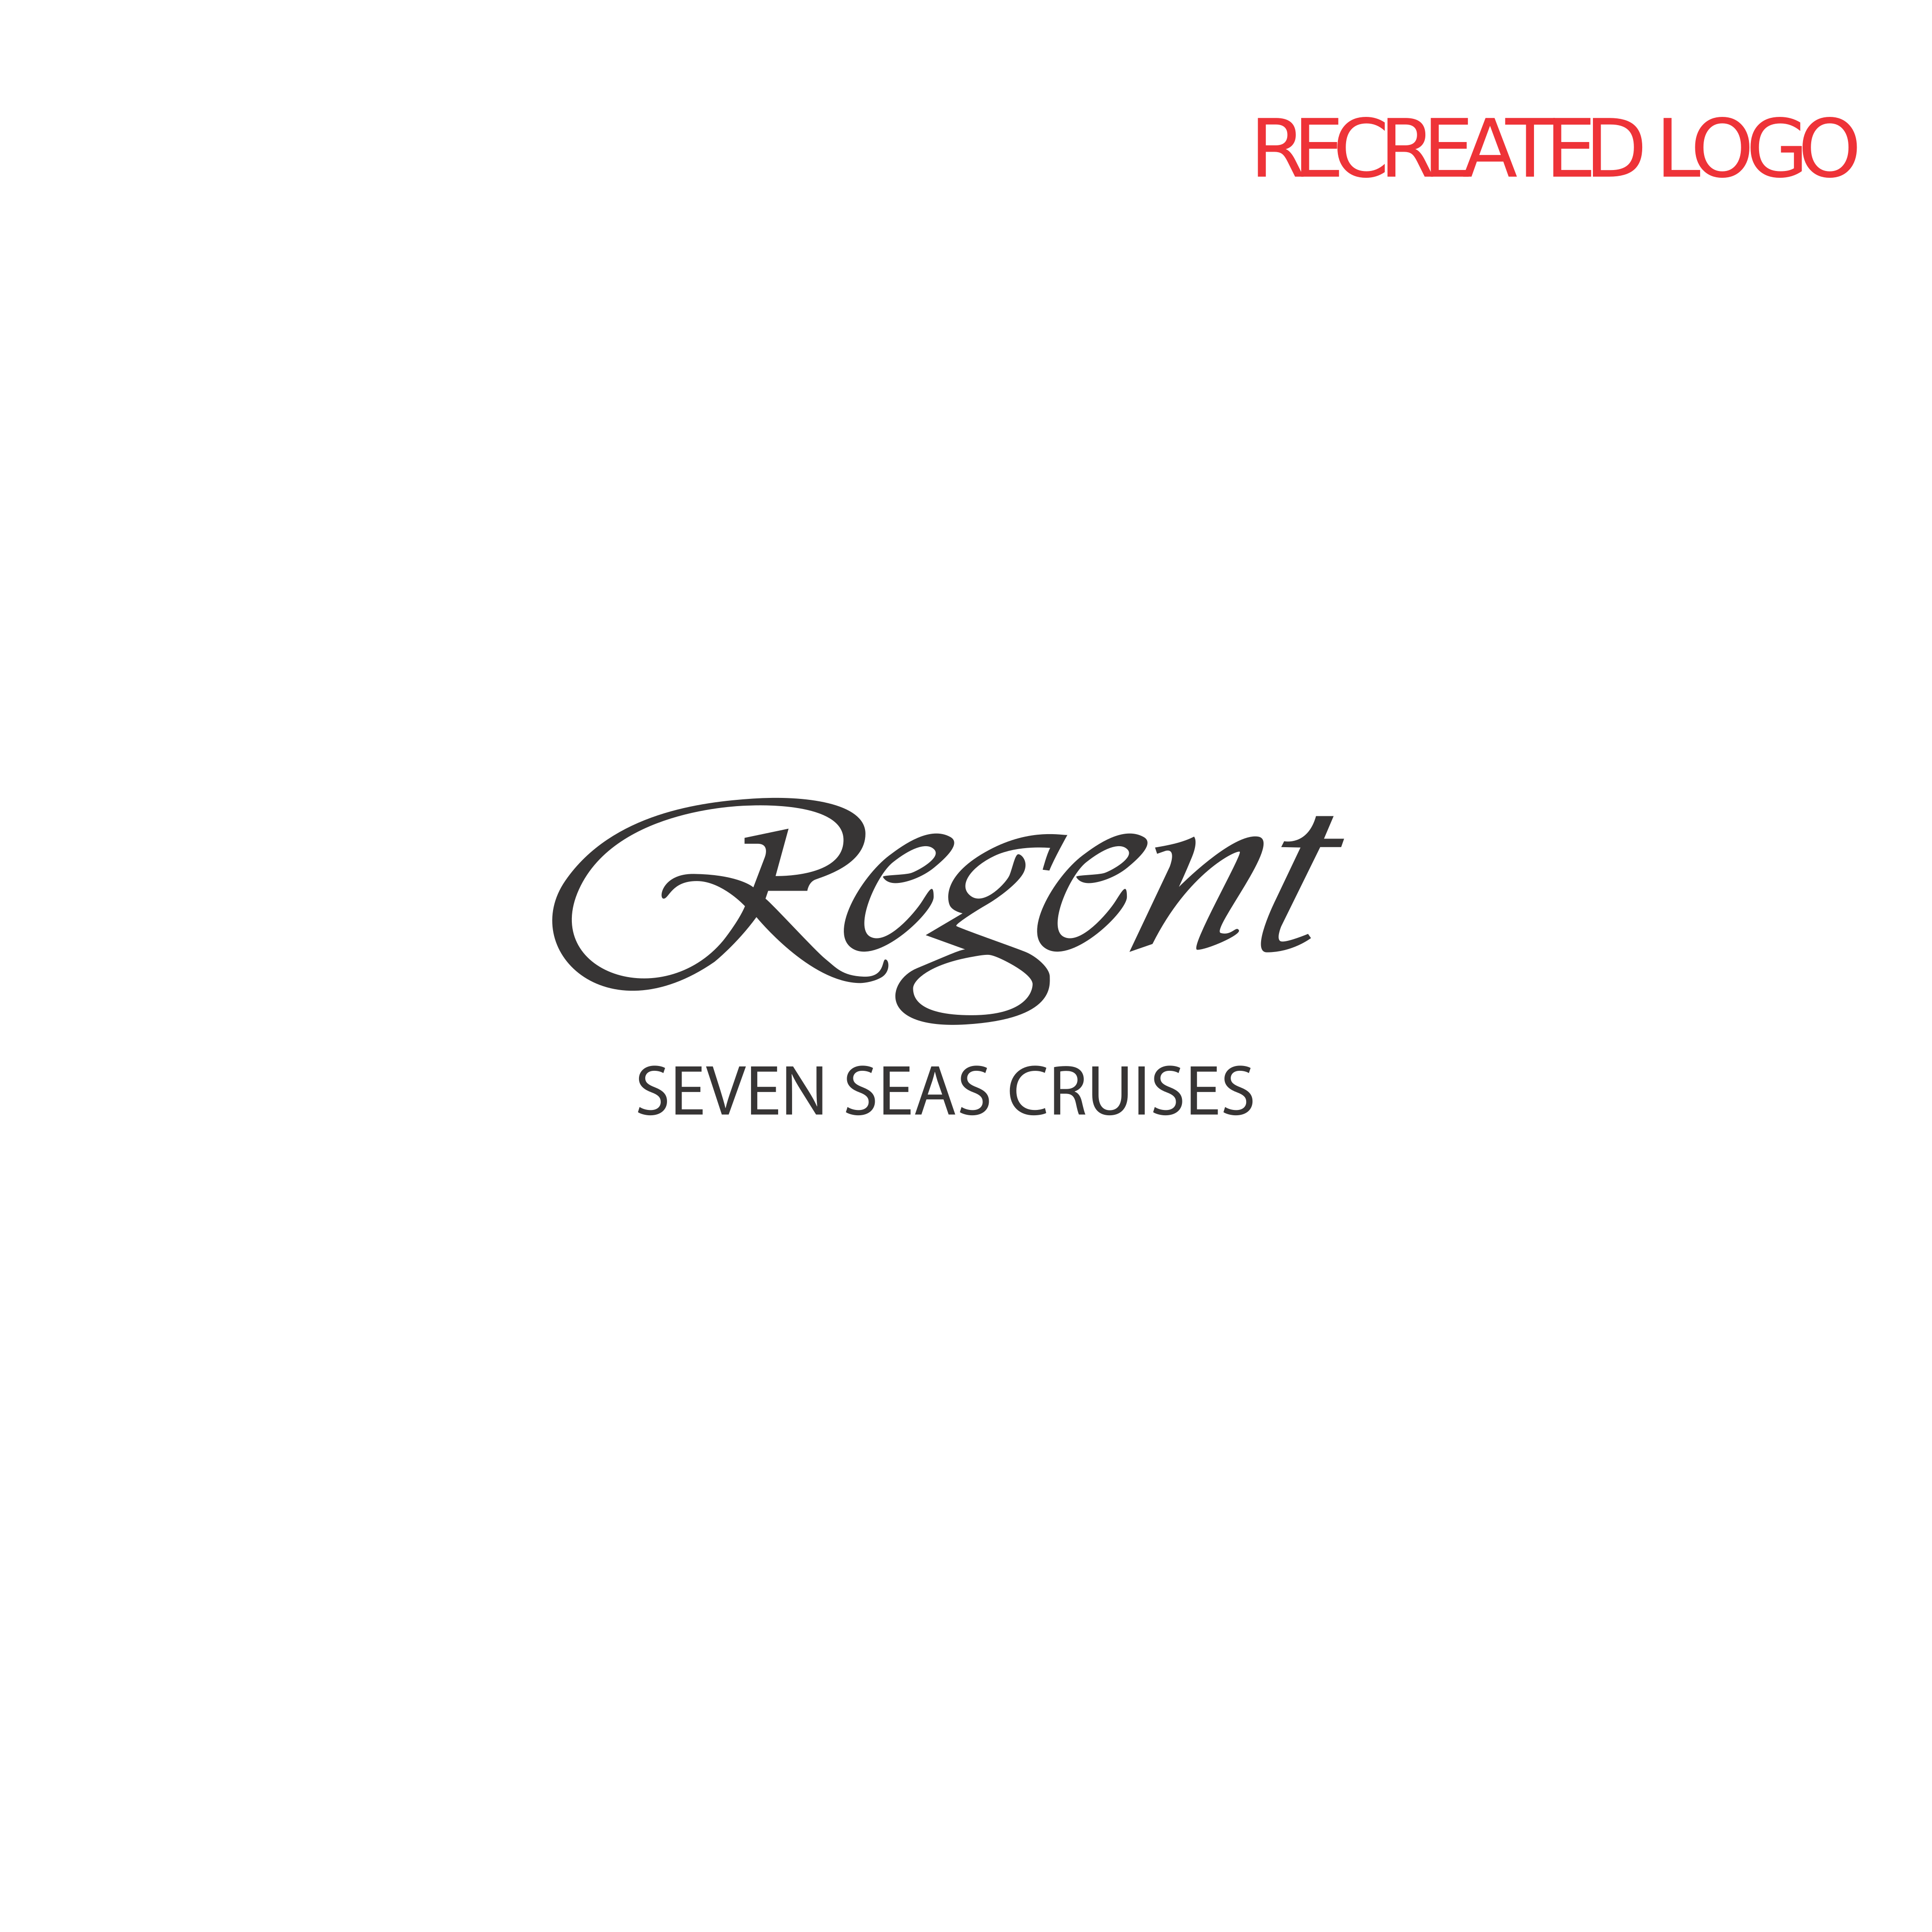 regent seven seas cruises logo